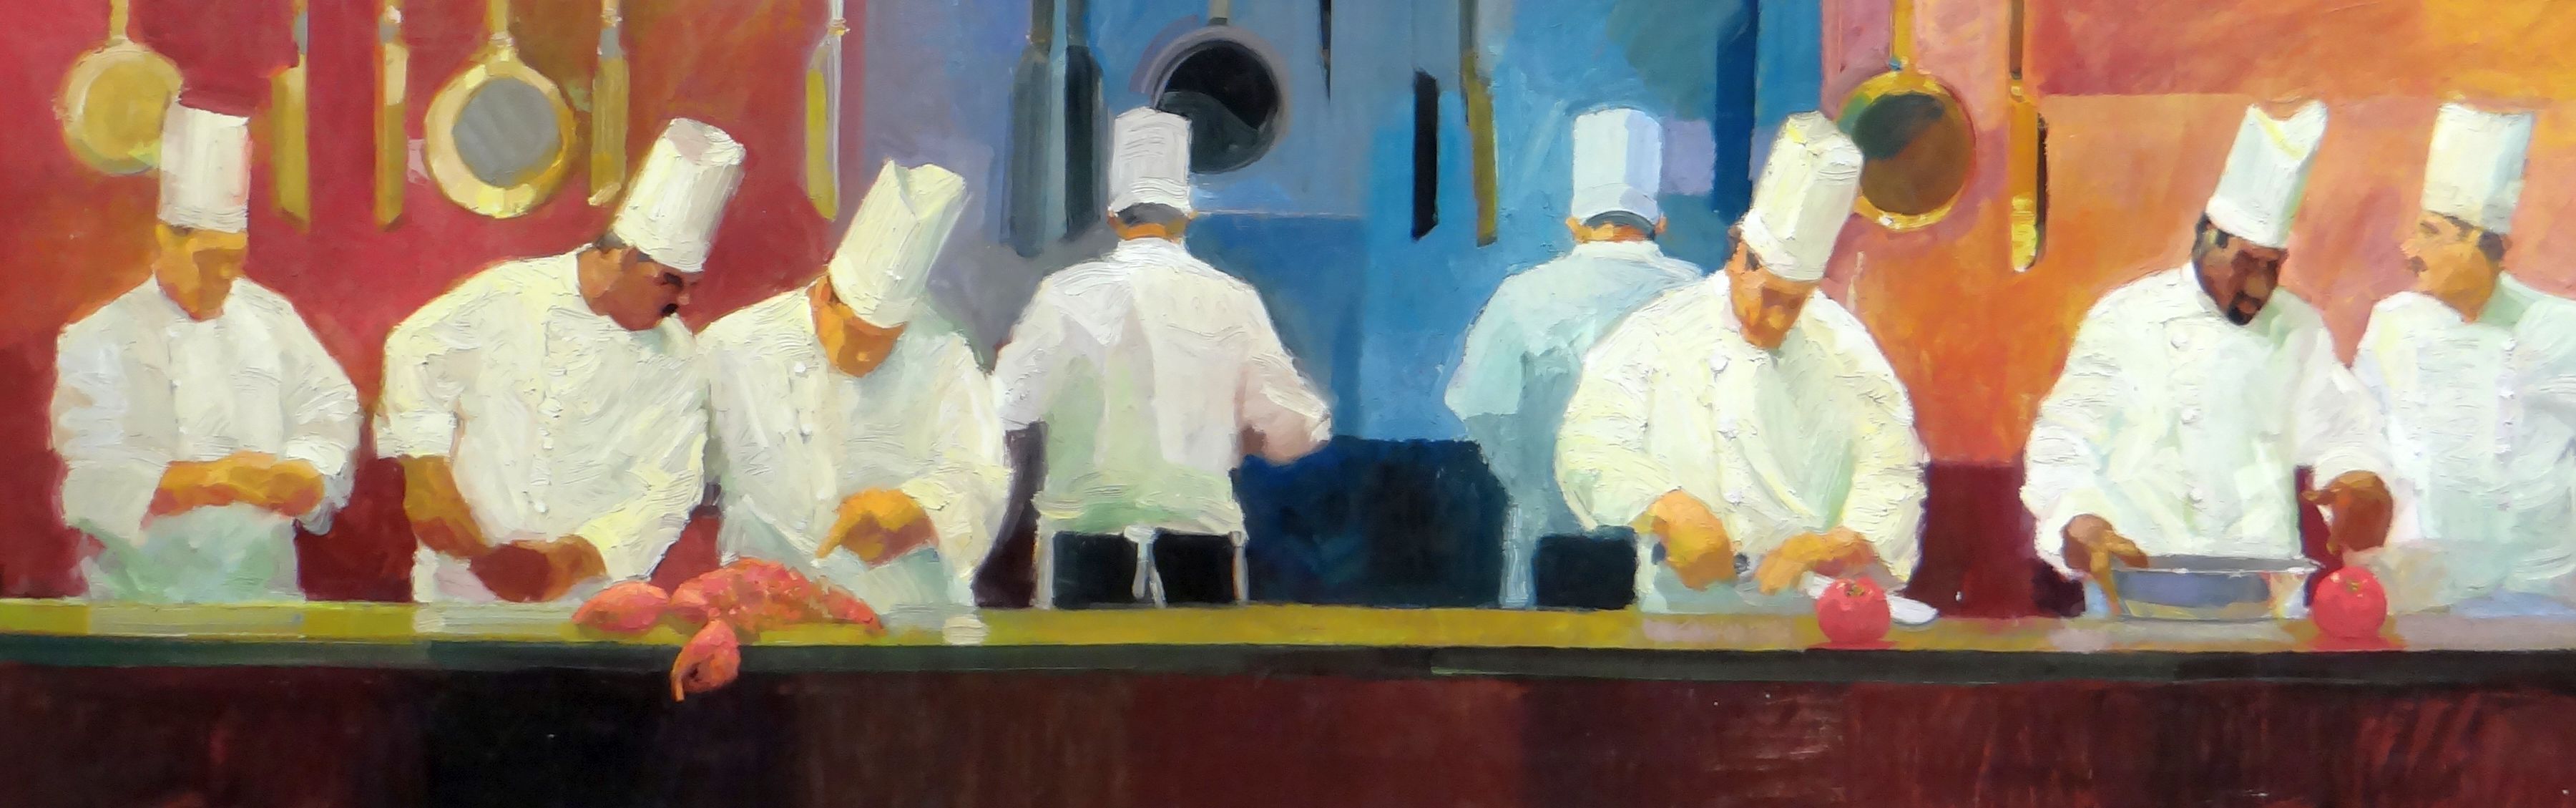 KEN AUSTER (American b.1949) giclee canvas print - eight chefs preparing food, 88 x 270cms